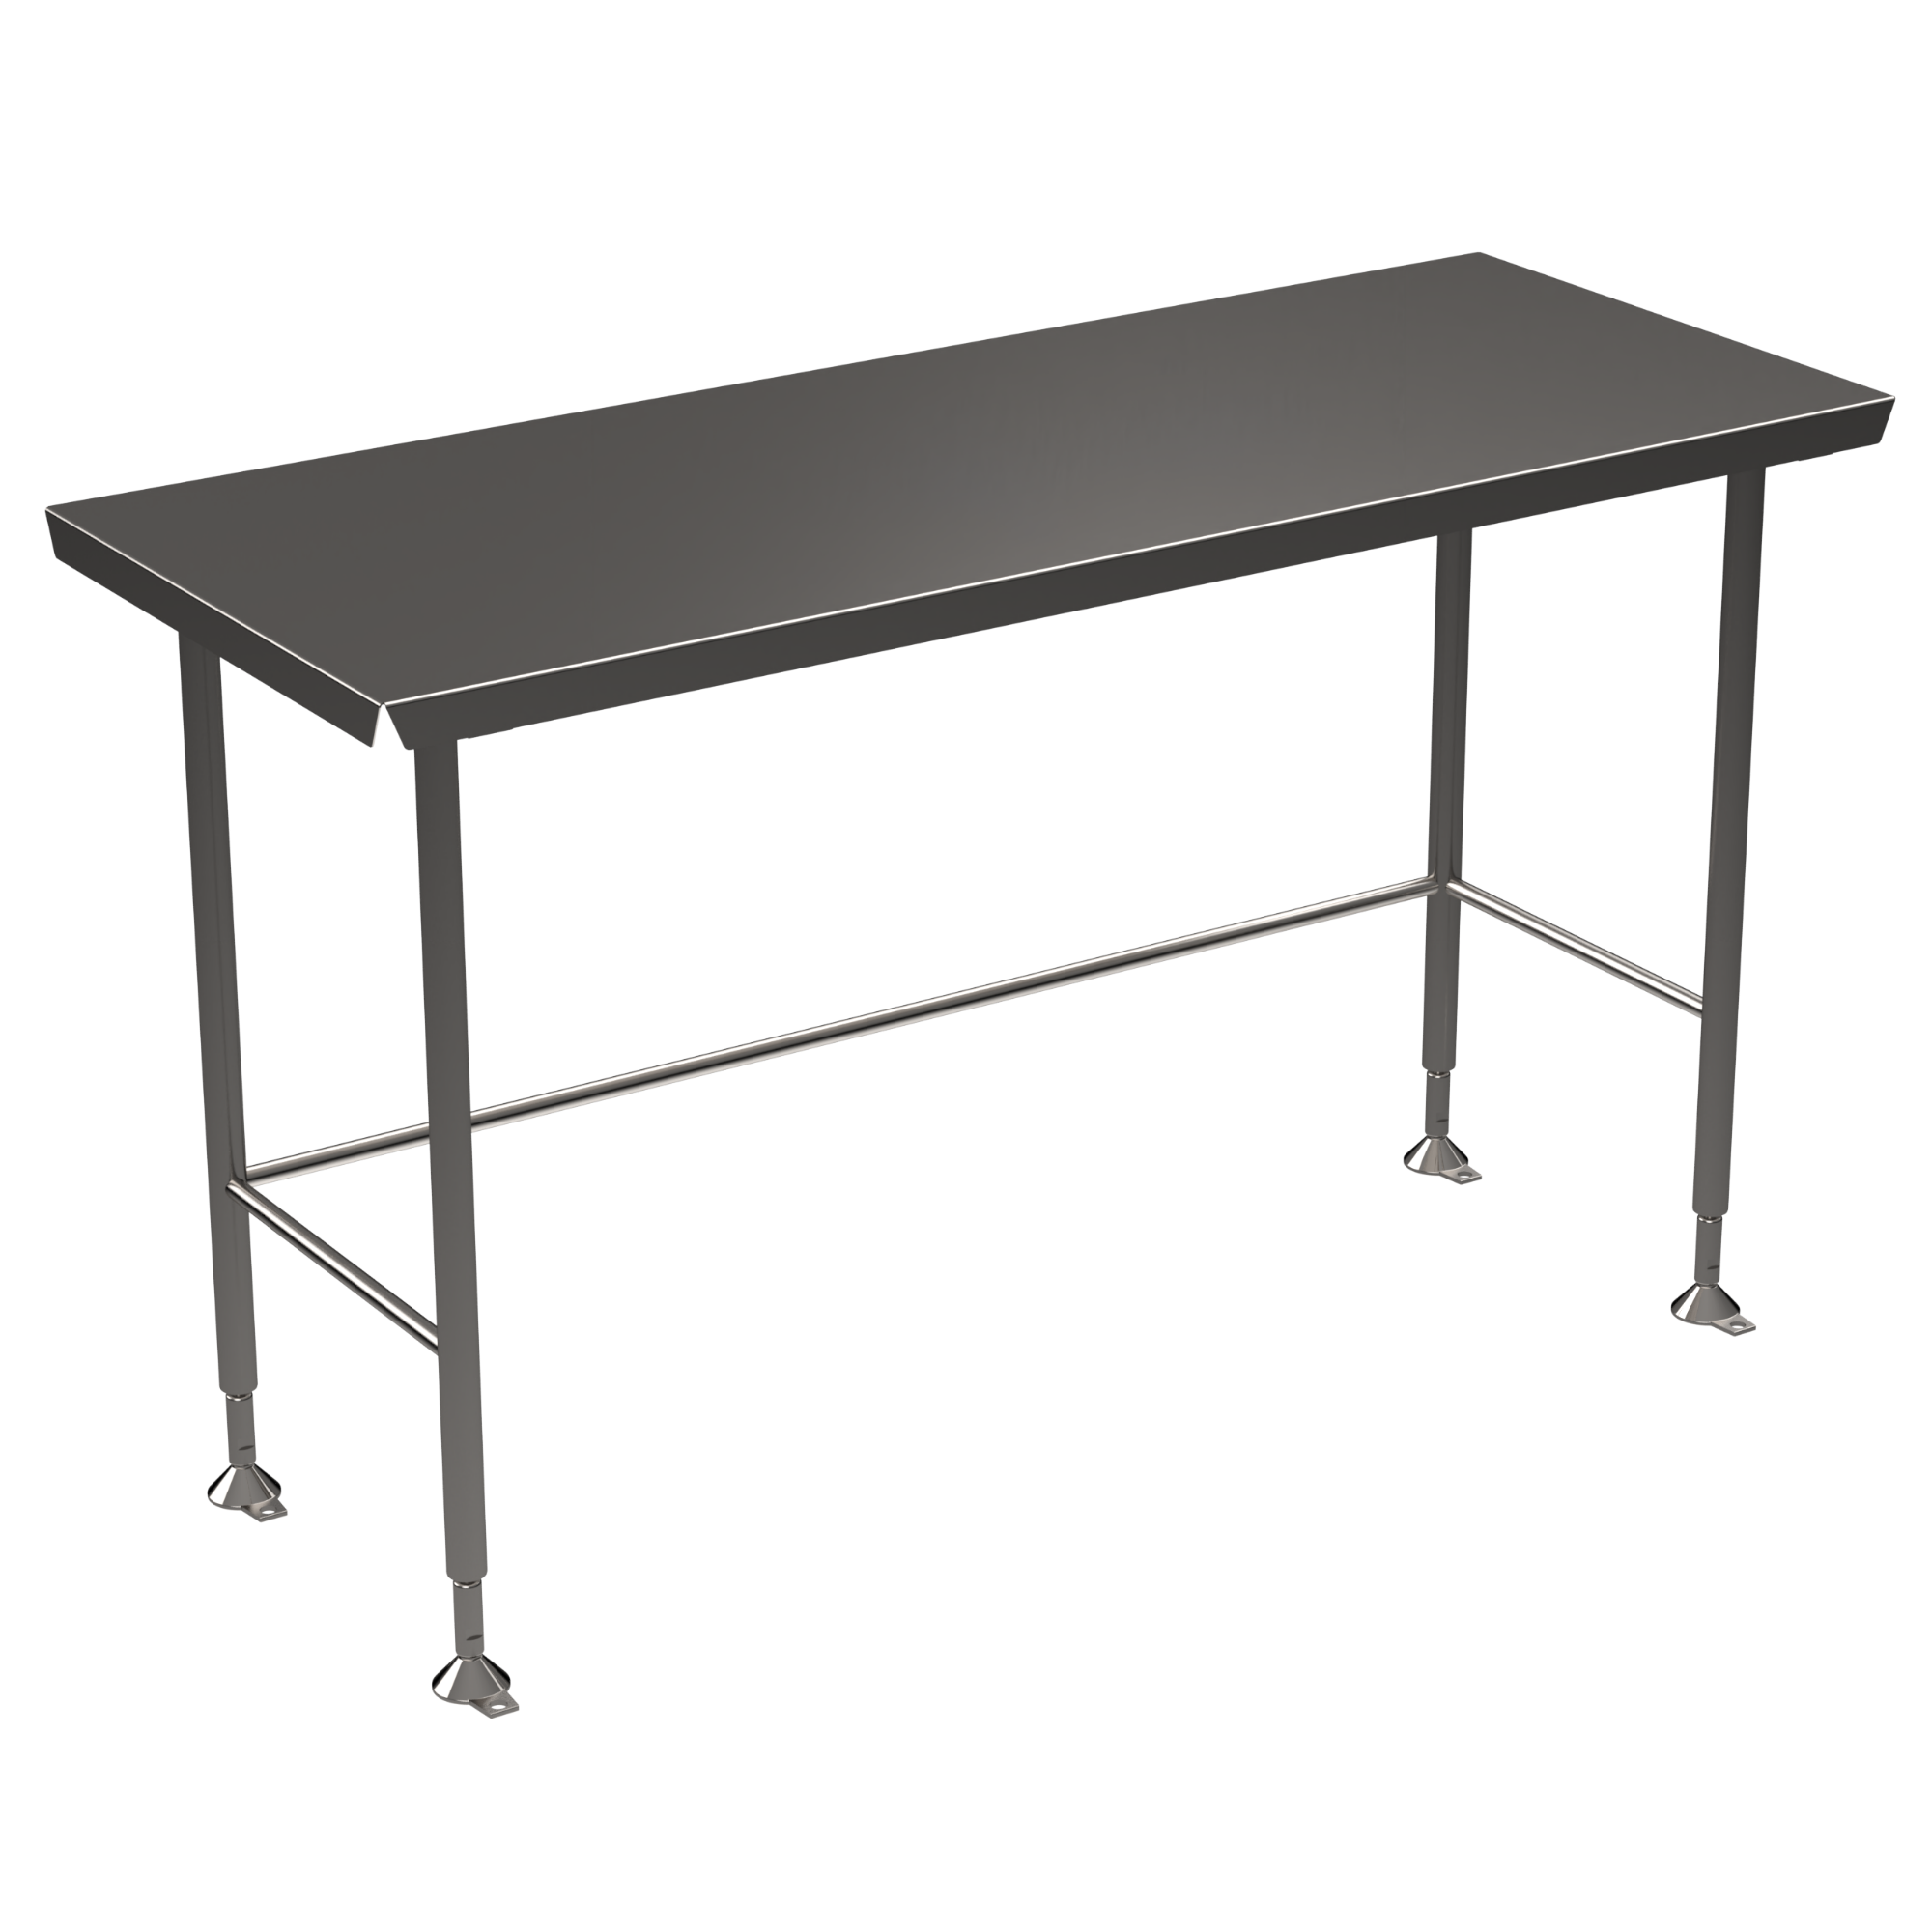 Stainless steel Hygienox table with tubular rear tie bar